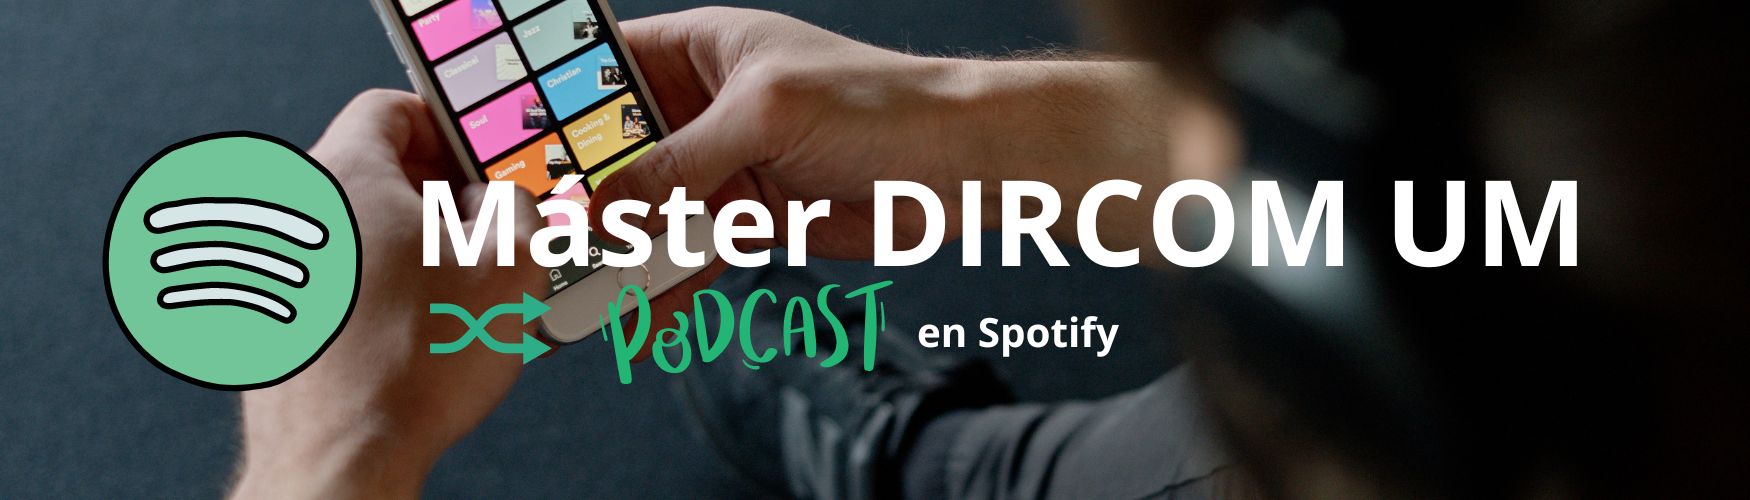 Podcast en Spotify del MDC UM